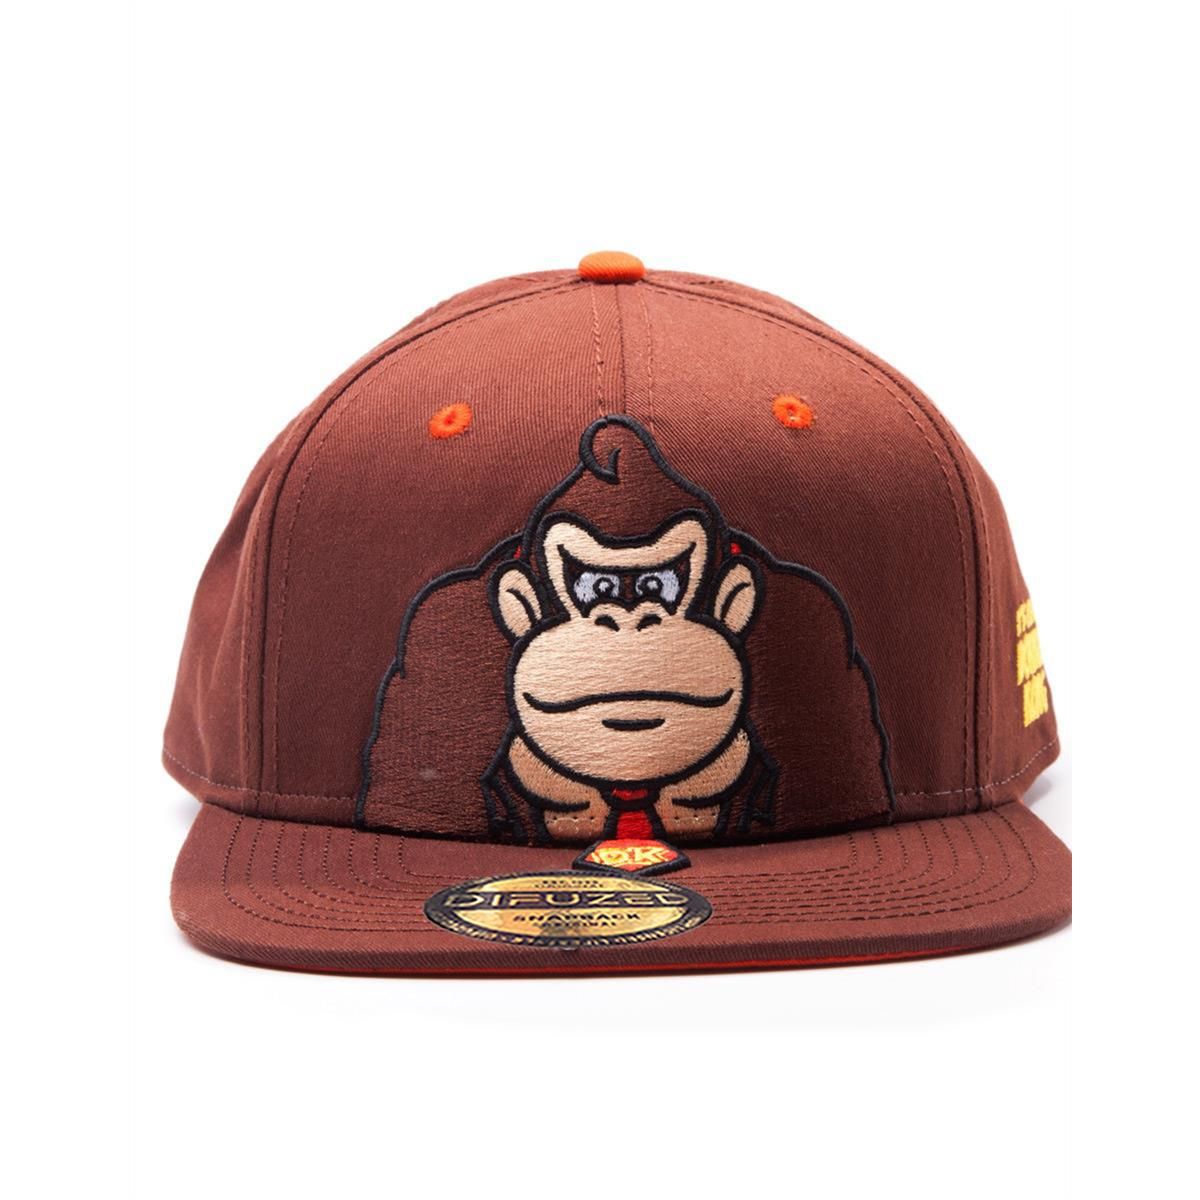 Nintendo Donkey Kong Snapback Cap Brown